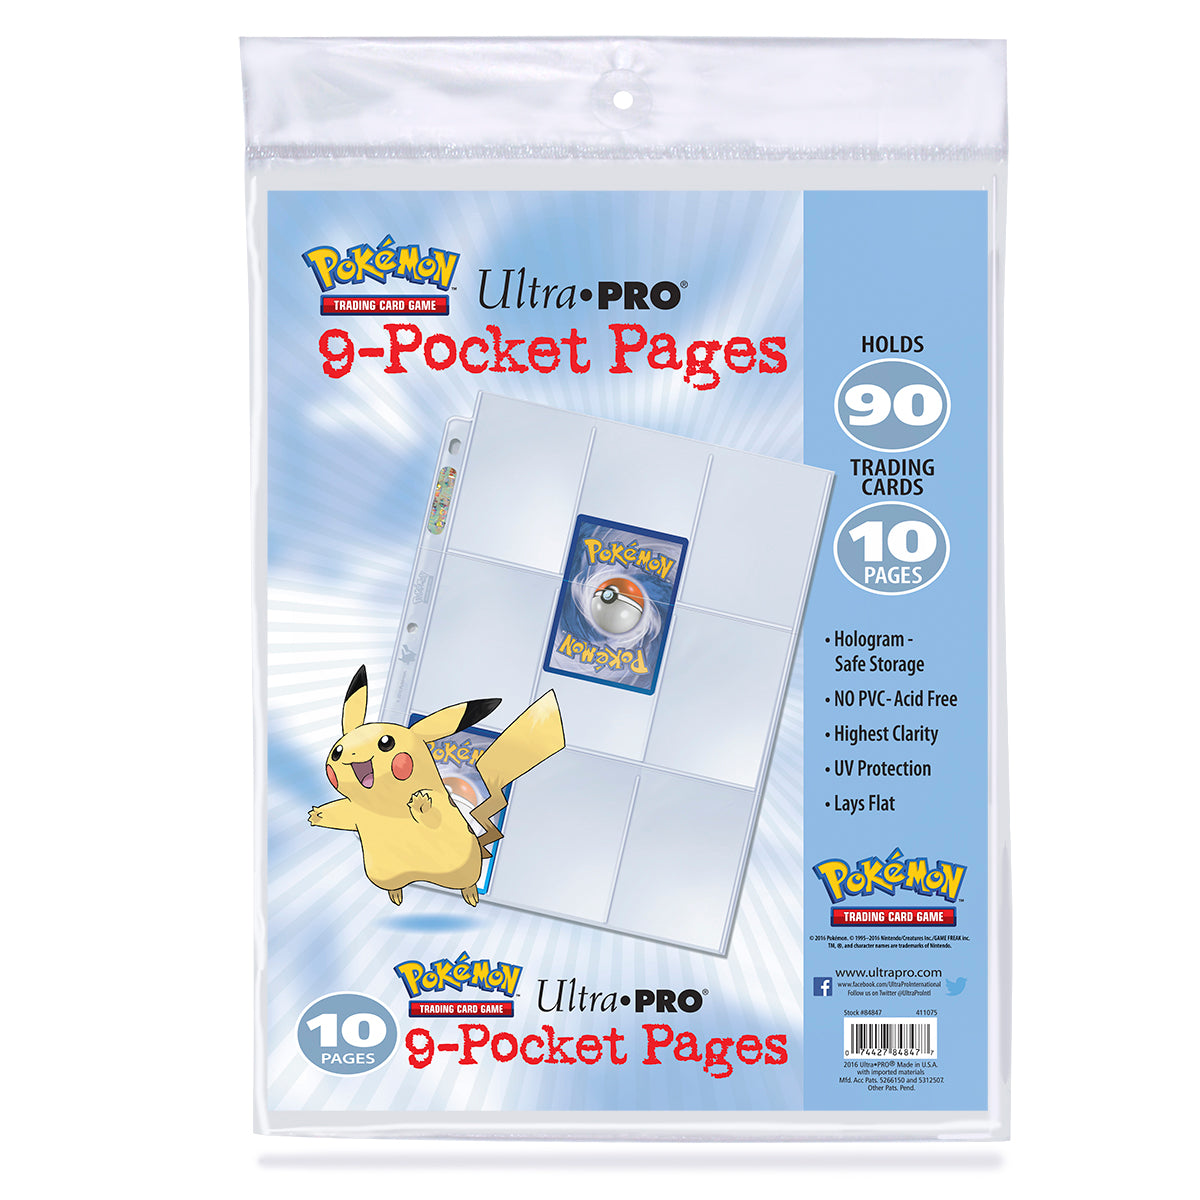 Pokémon 9-Pocket Pages (10 count retail pack)